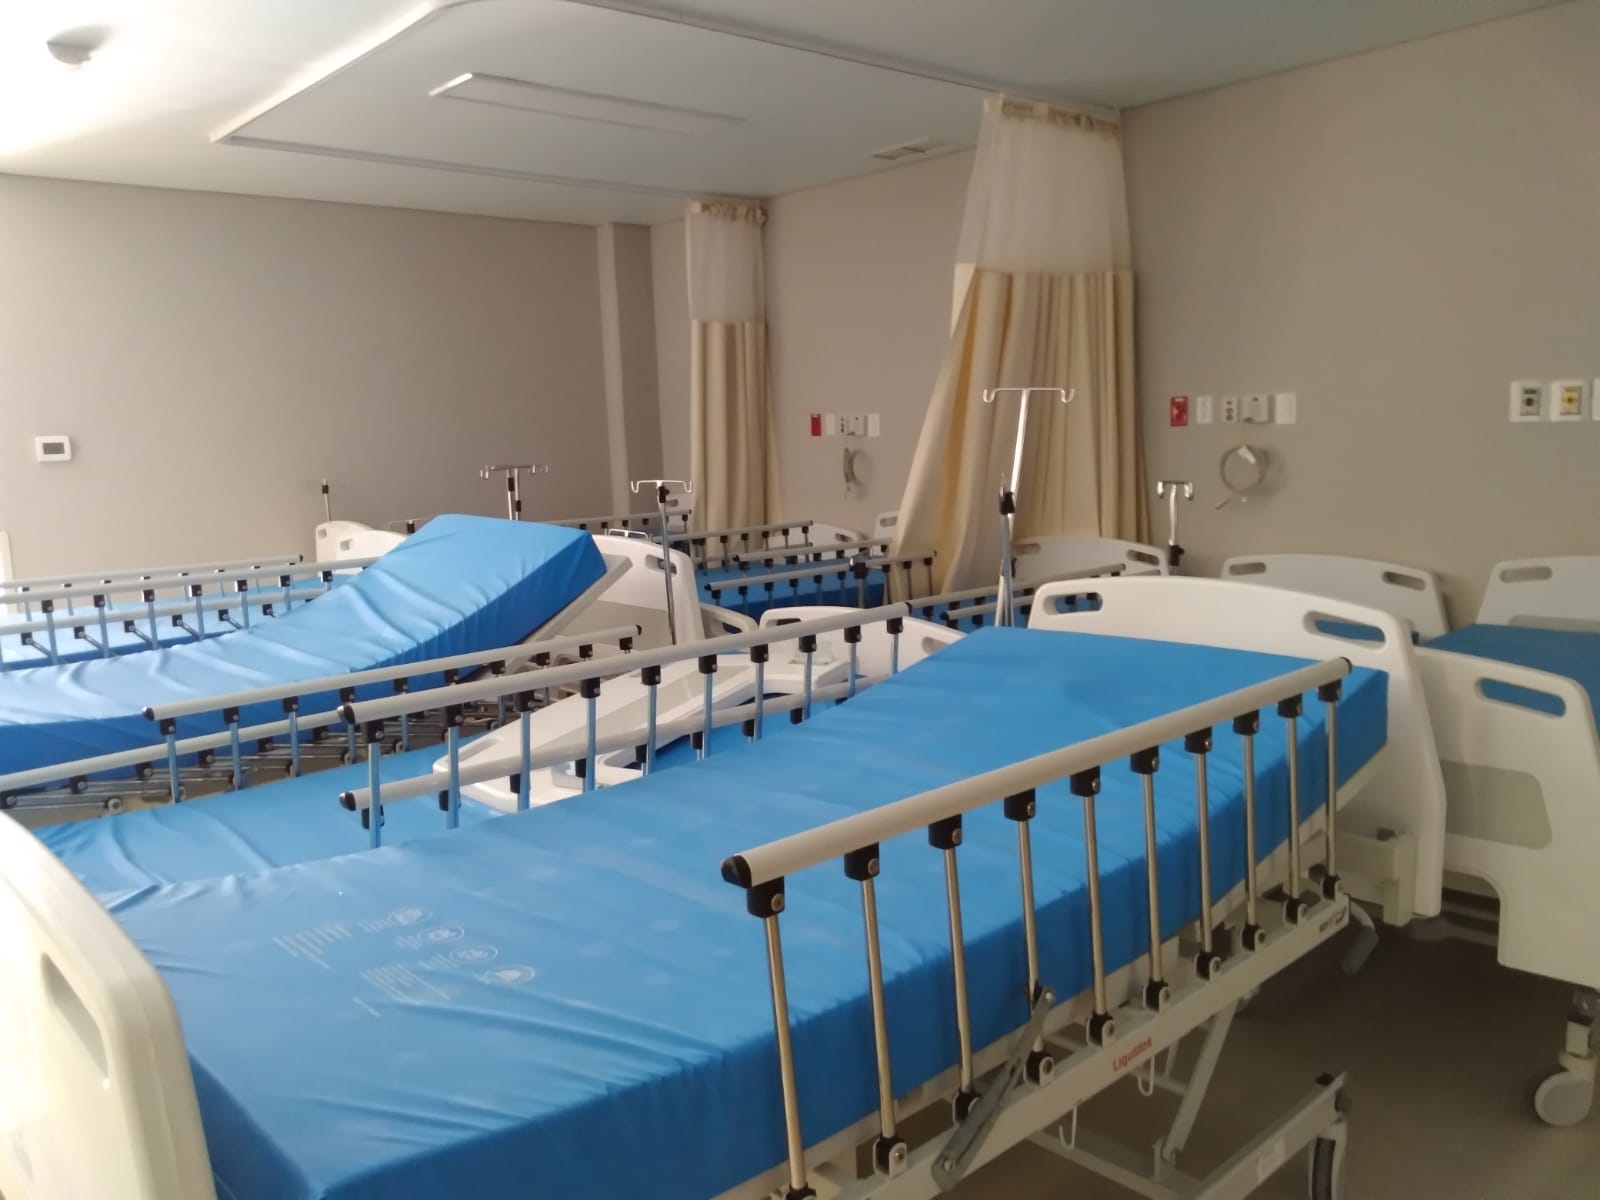 Ante aumento de casos, reabre hospital Covid de Juchitán que administra Sedena; arranca con 5 camas